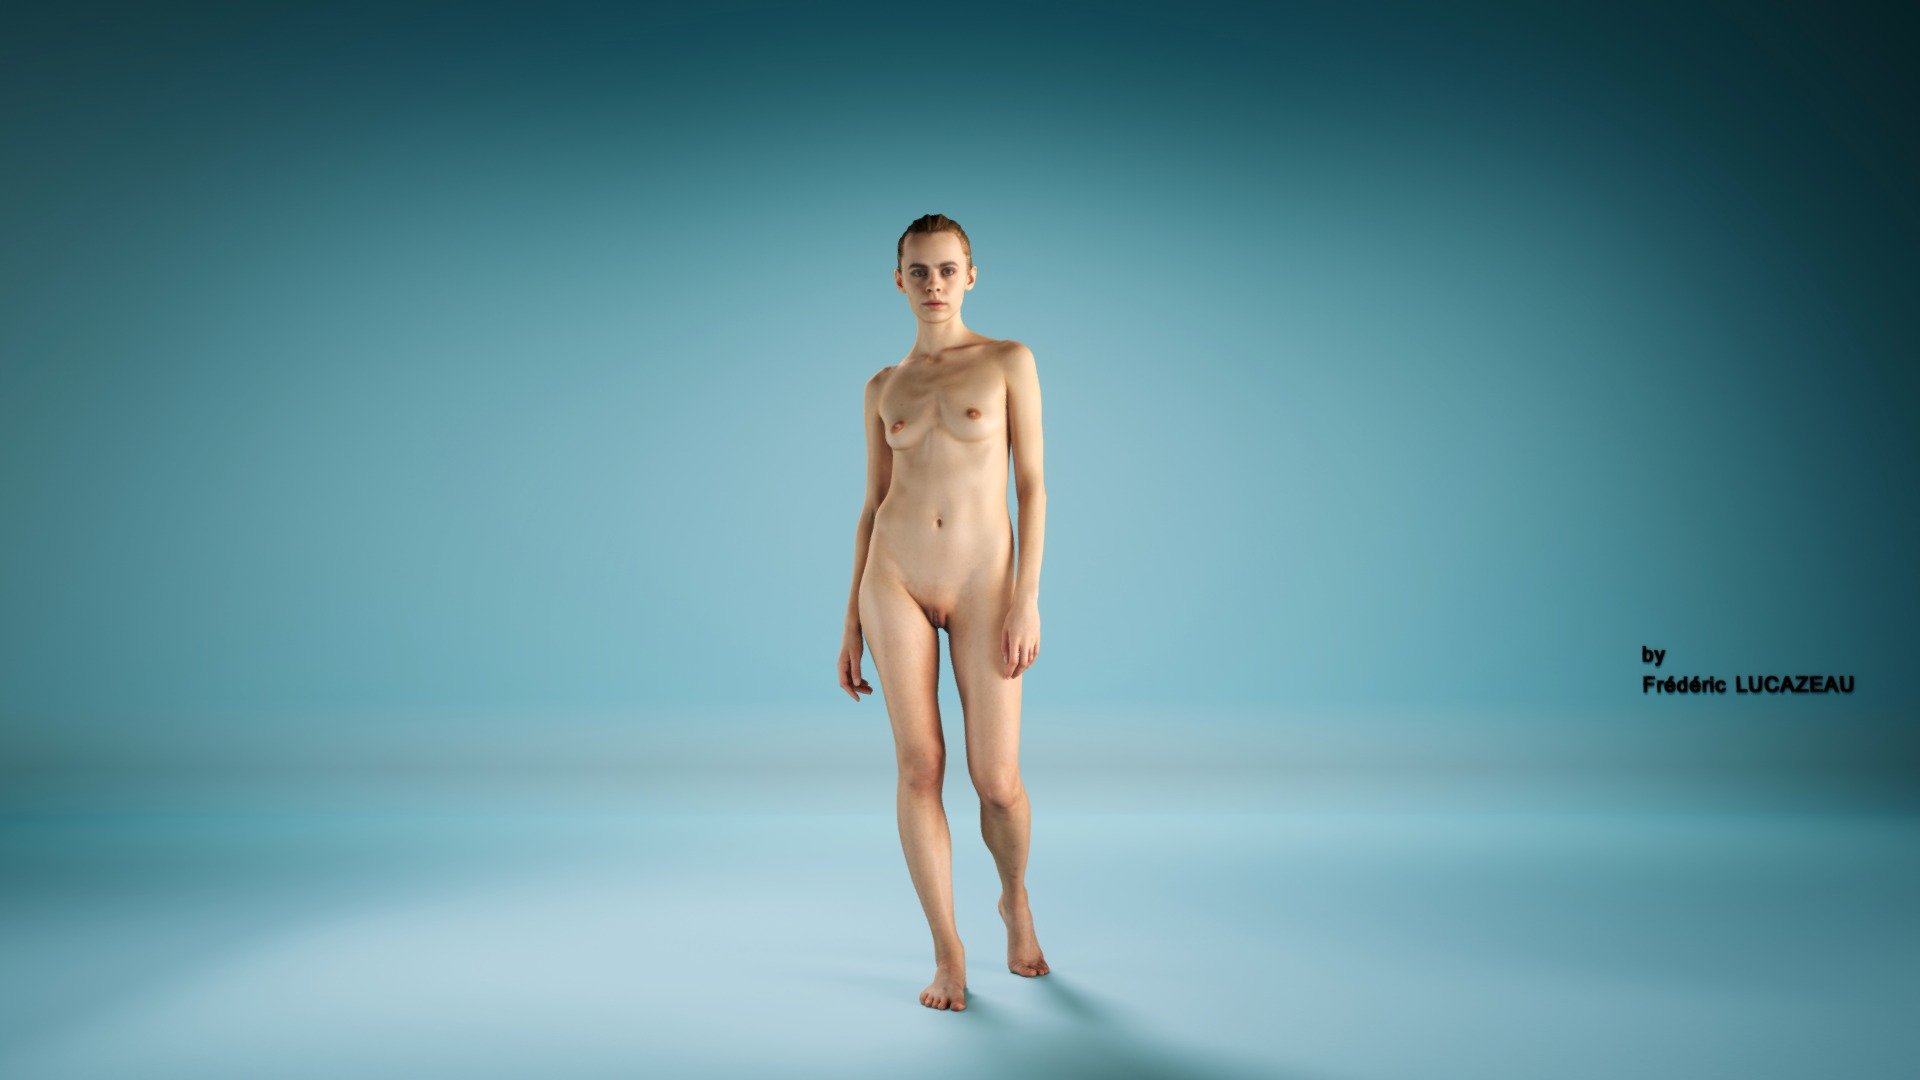 gracie nude model standing in a photostudio cyclorama